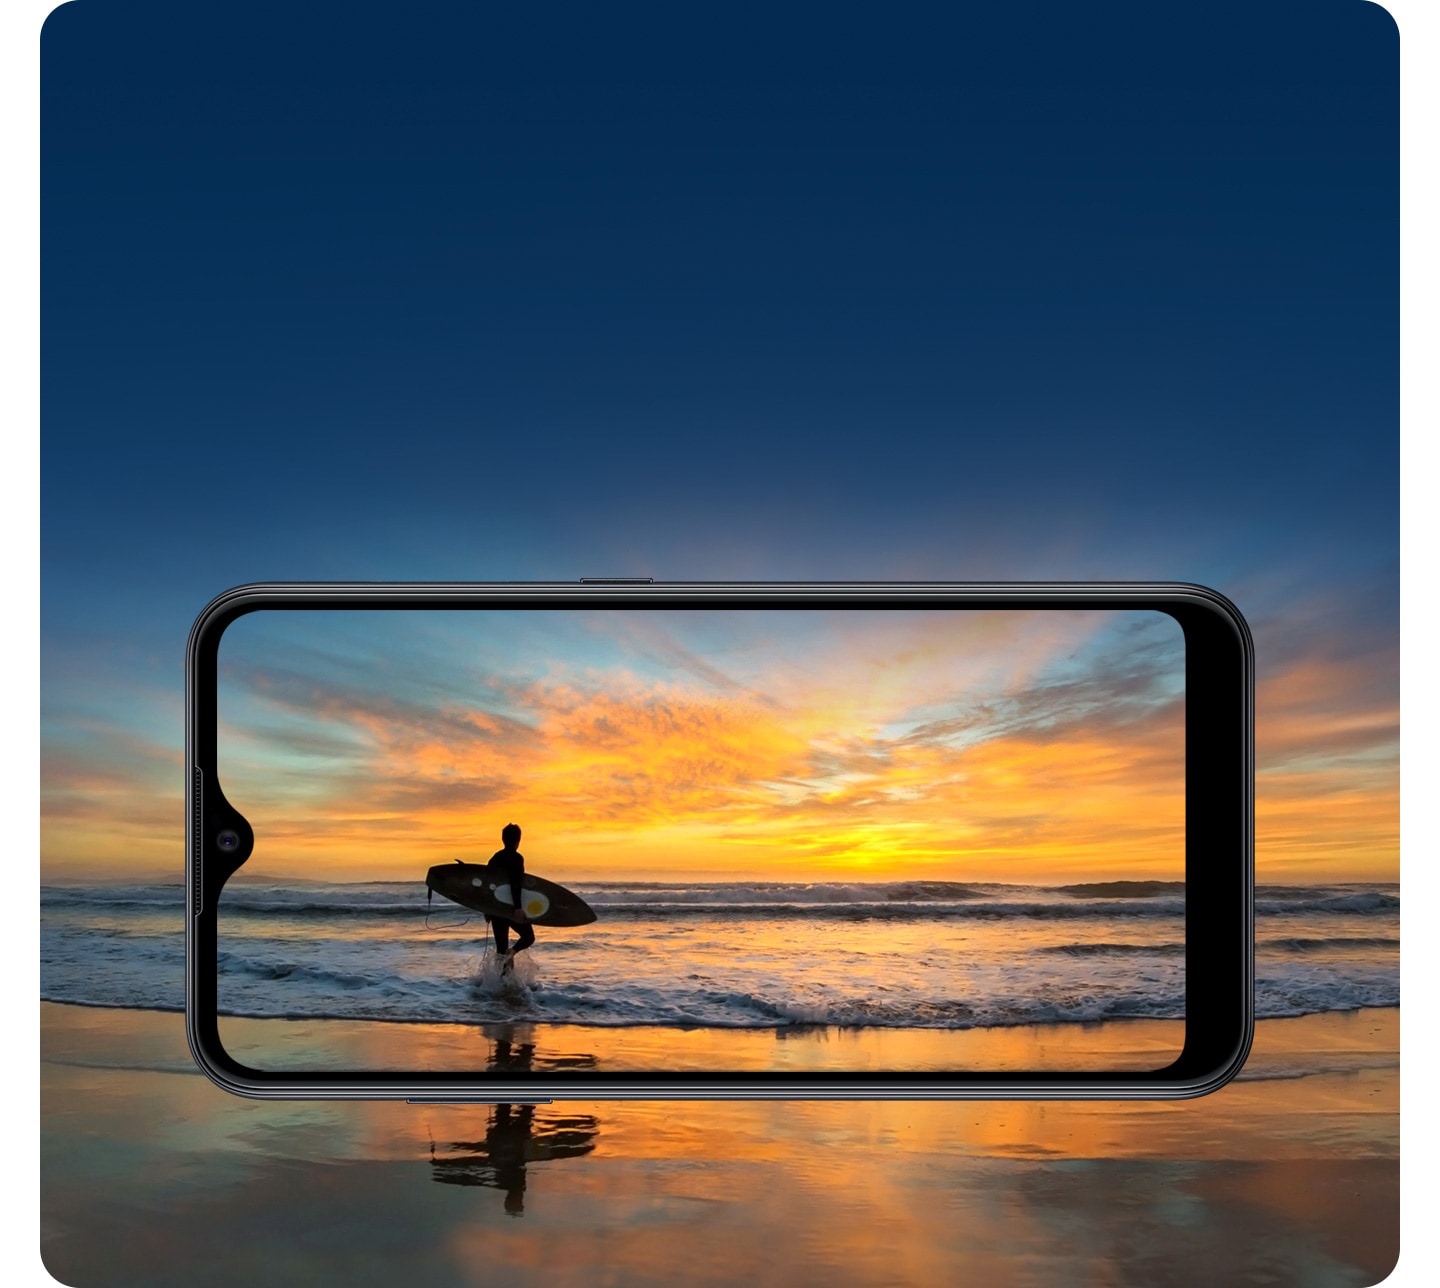 موبایل سامسونگ (Samsung Galaxy A01 (2020